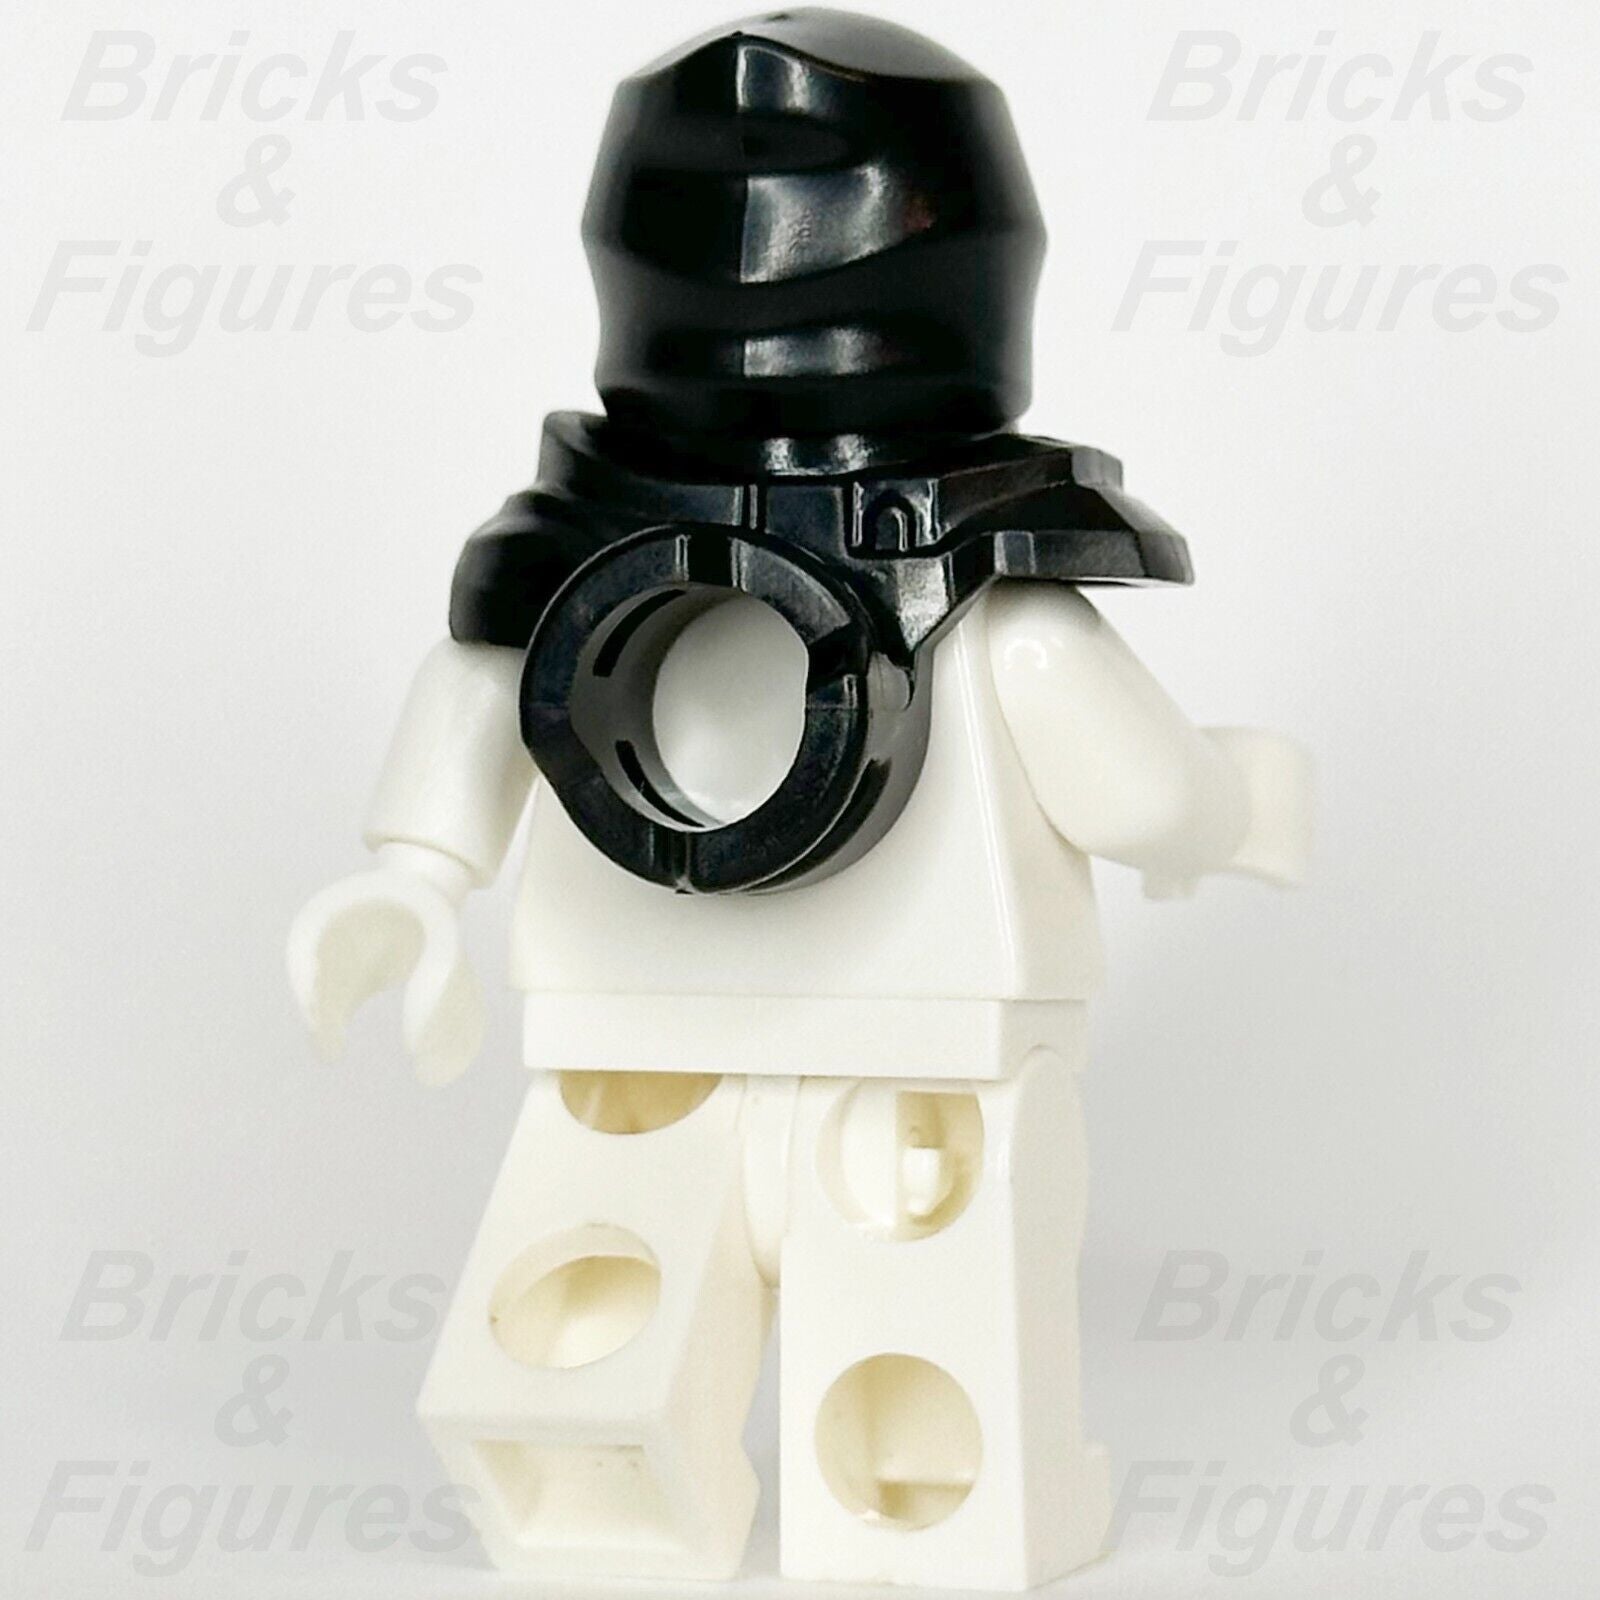 LEGO Ninjago Black Shoulder Armour Scabbard Minifigure Part w/ Helmet 2187 2188 - Bricks & Figures